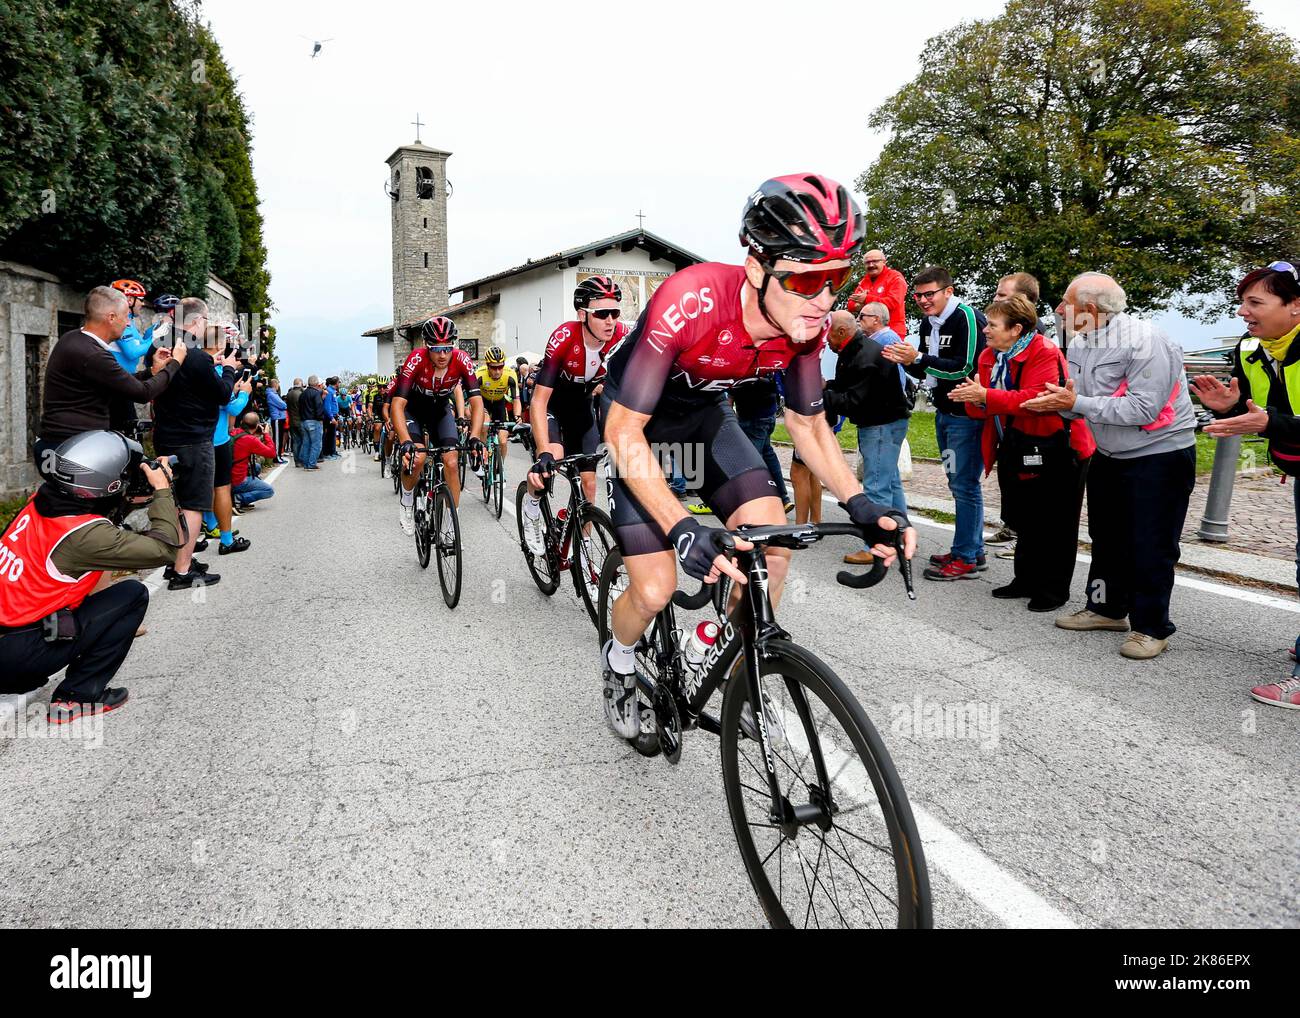 Team Ineos beim Rennen Il Lombardia 2019 in Lombardia, Italien, am Samstag, 12. Oktober 2019. Stockfoto